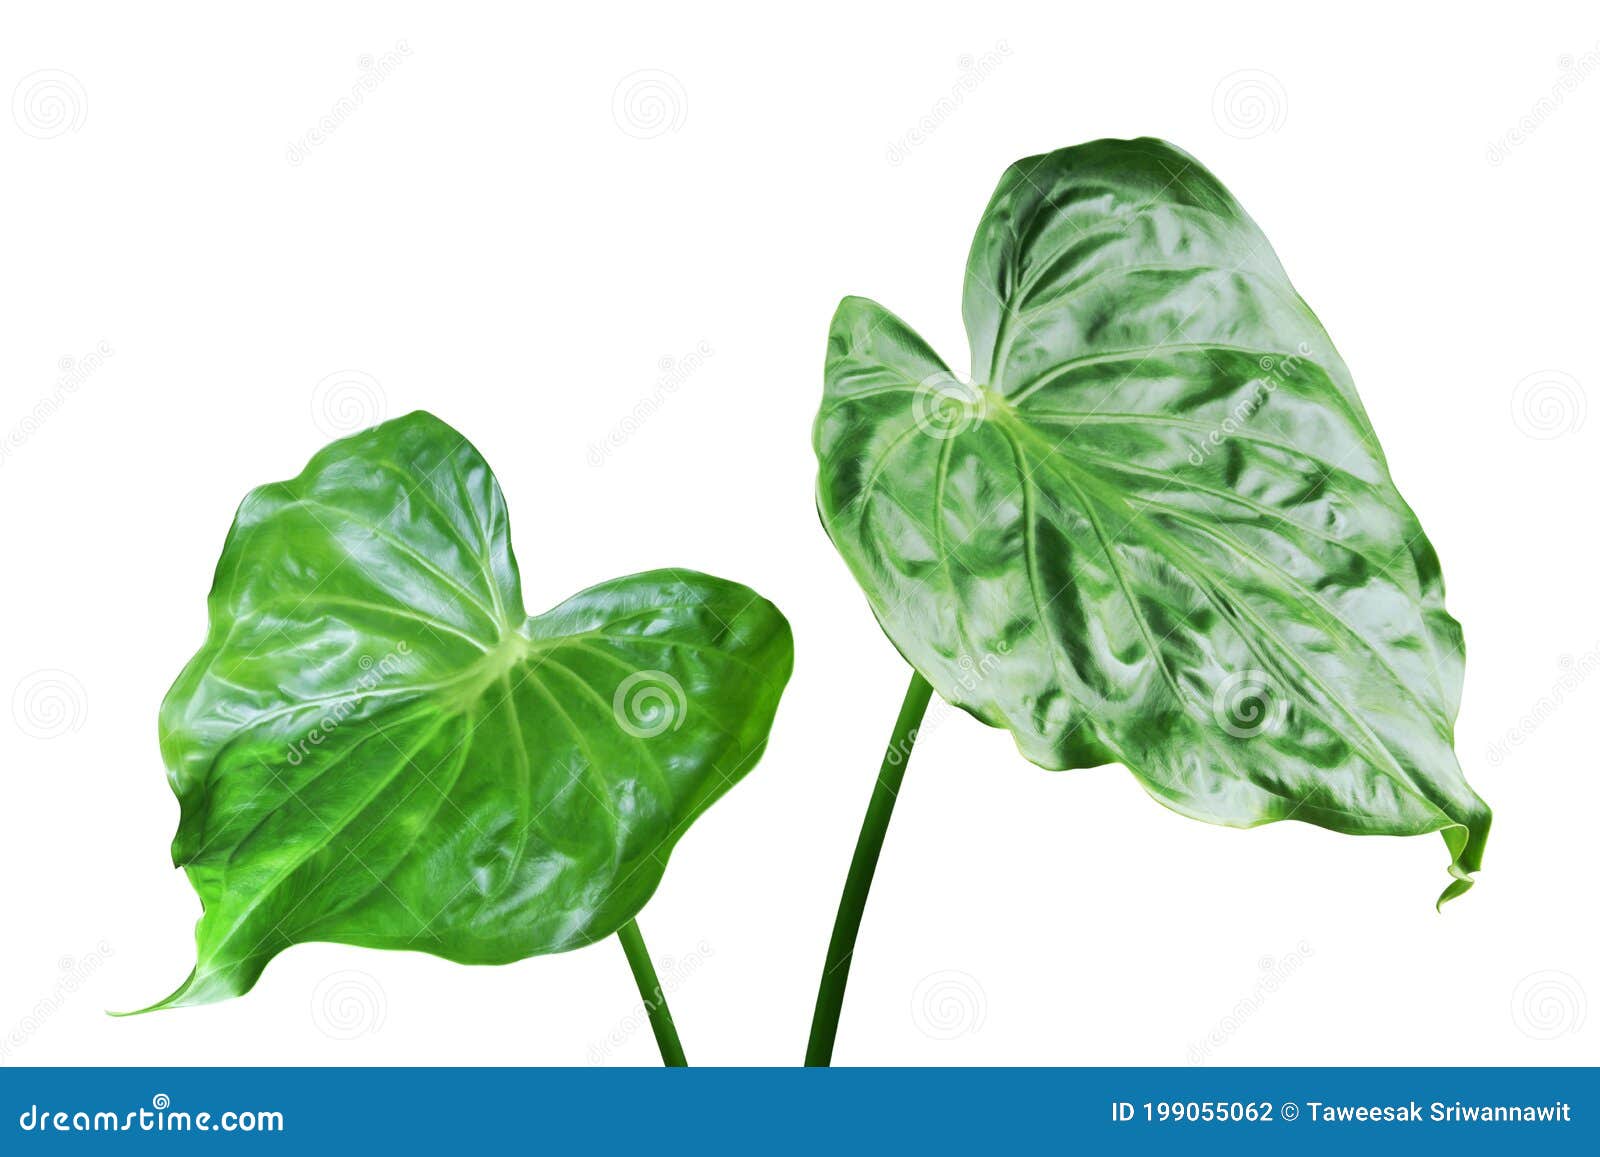 Green Leaves of Heart-shaped Elephant Ear, Buddha S Hand Plant Isolated ...